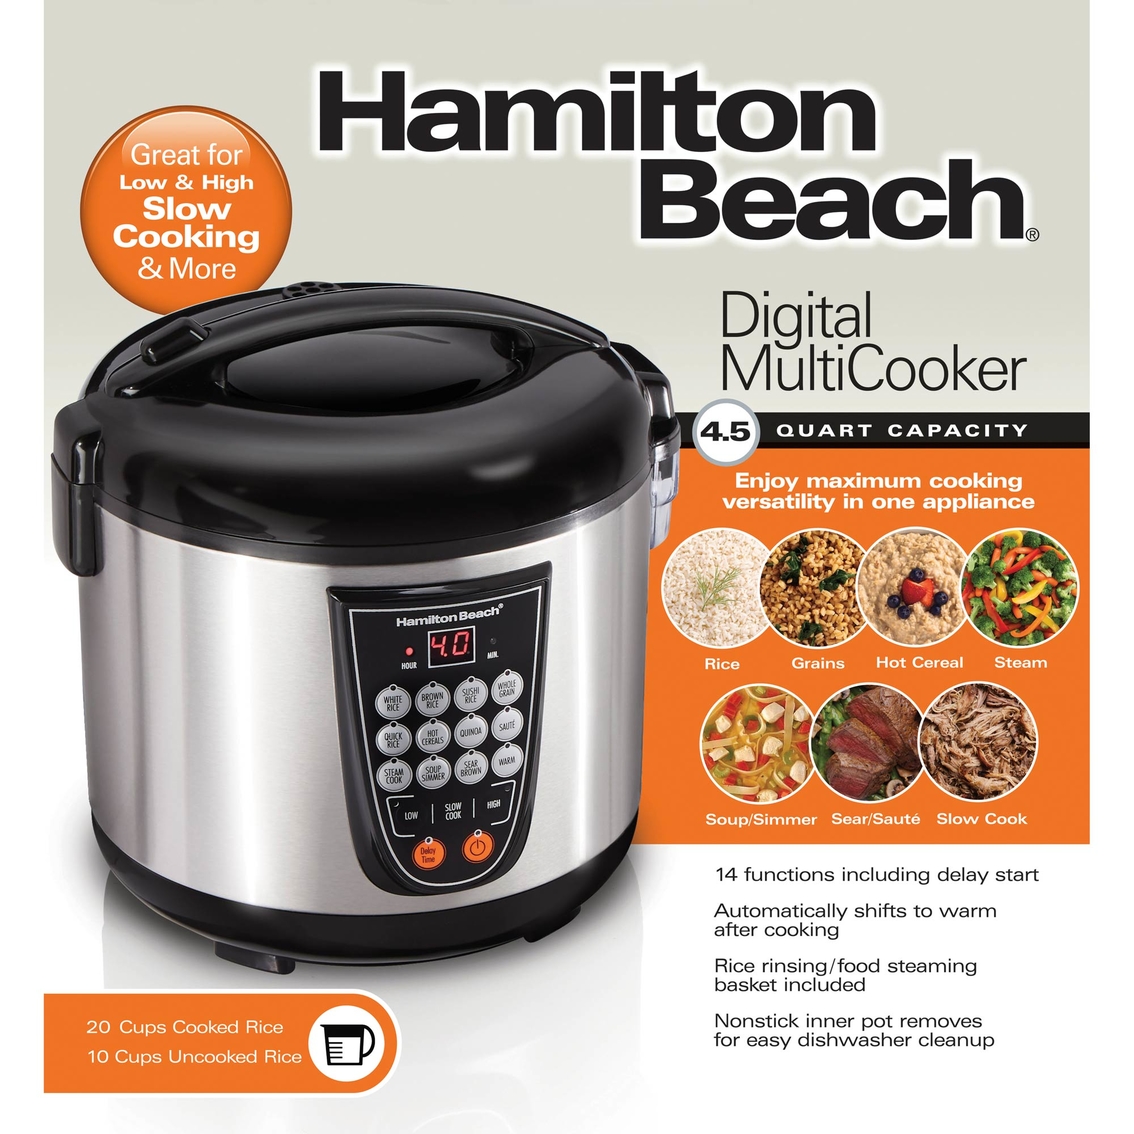 Hamilton Beach Digital MultiCooker 4.5 Qt. - Image 4 of 4